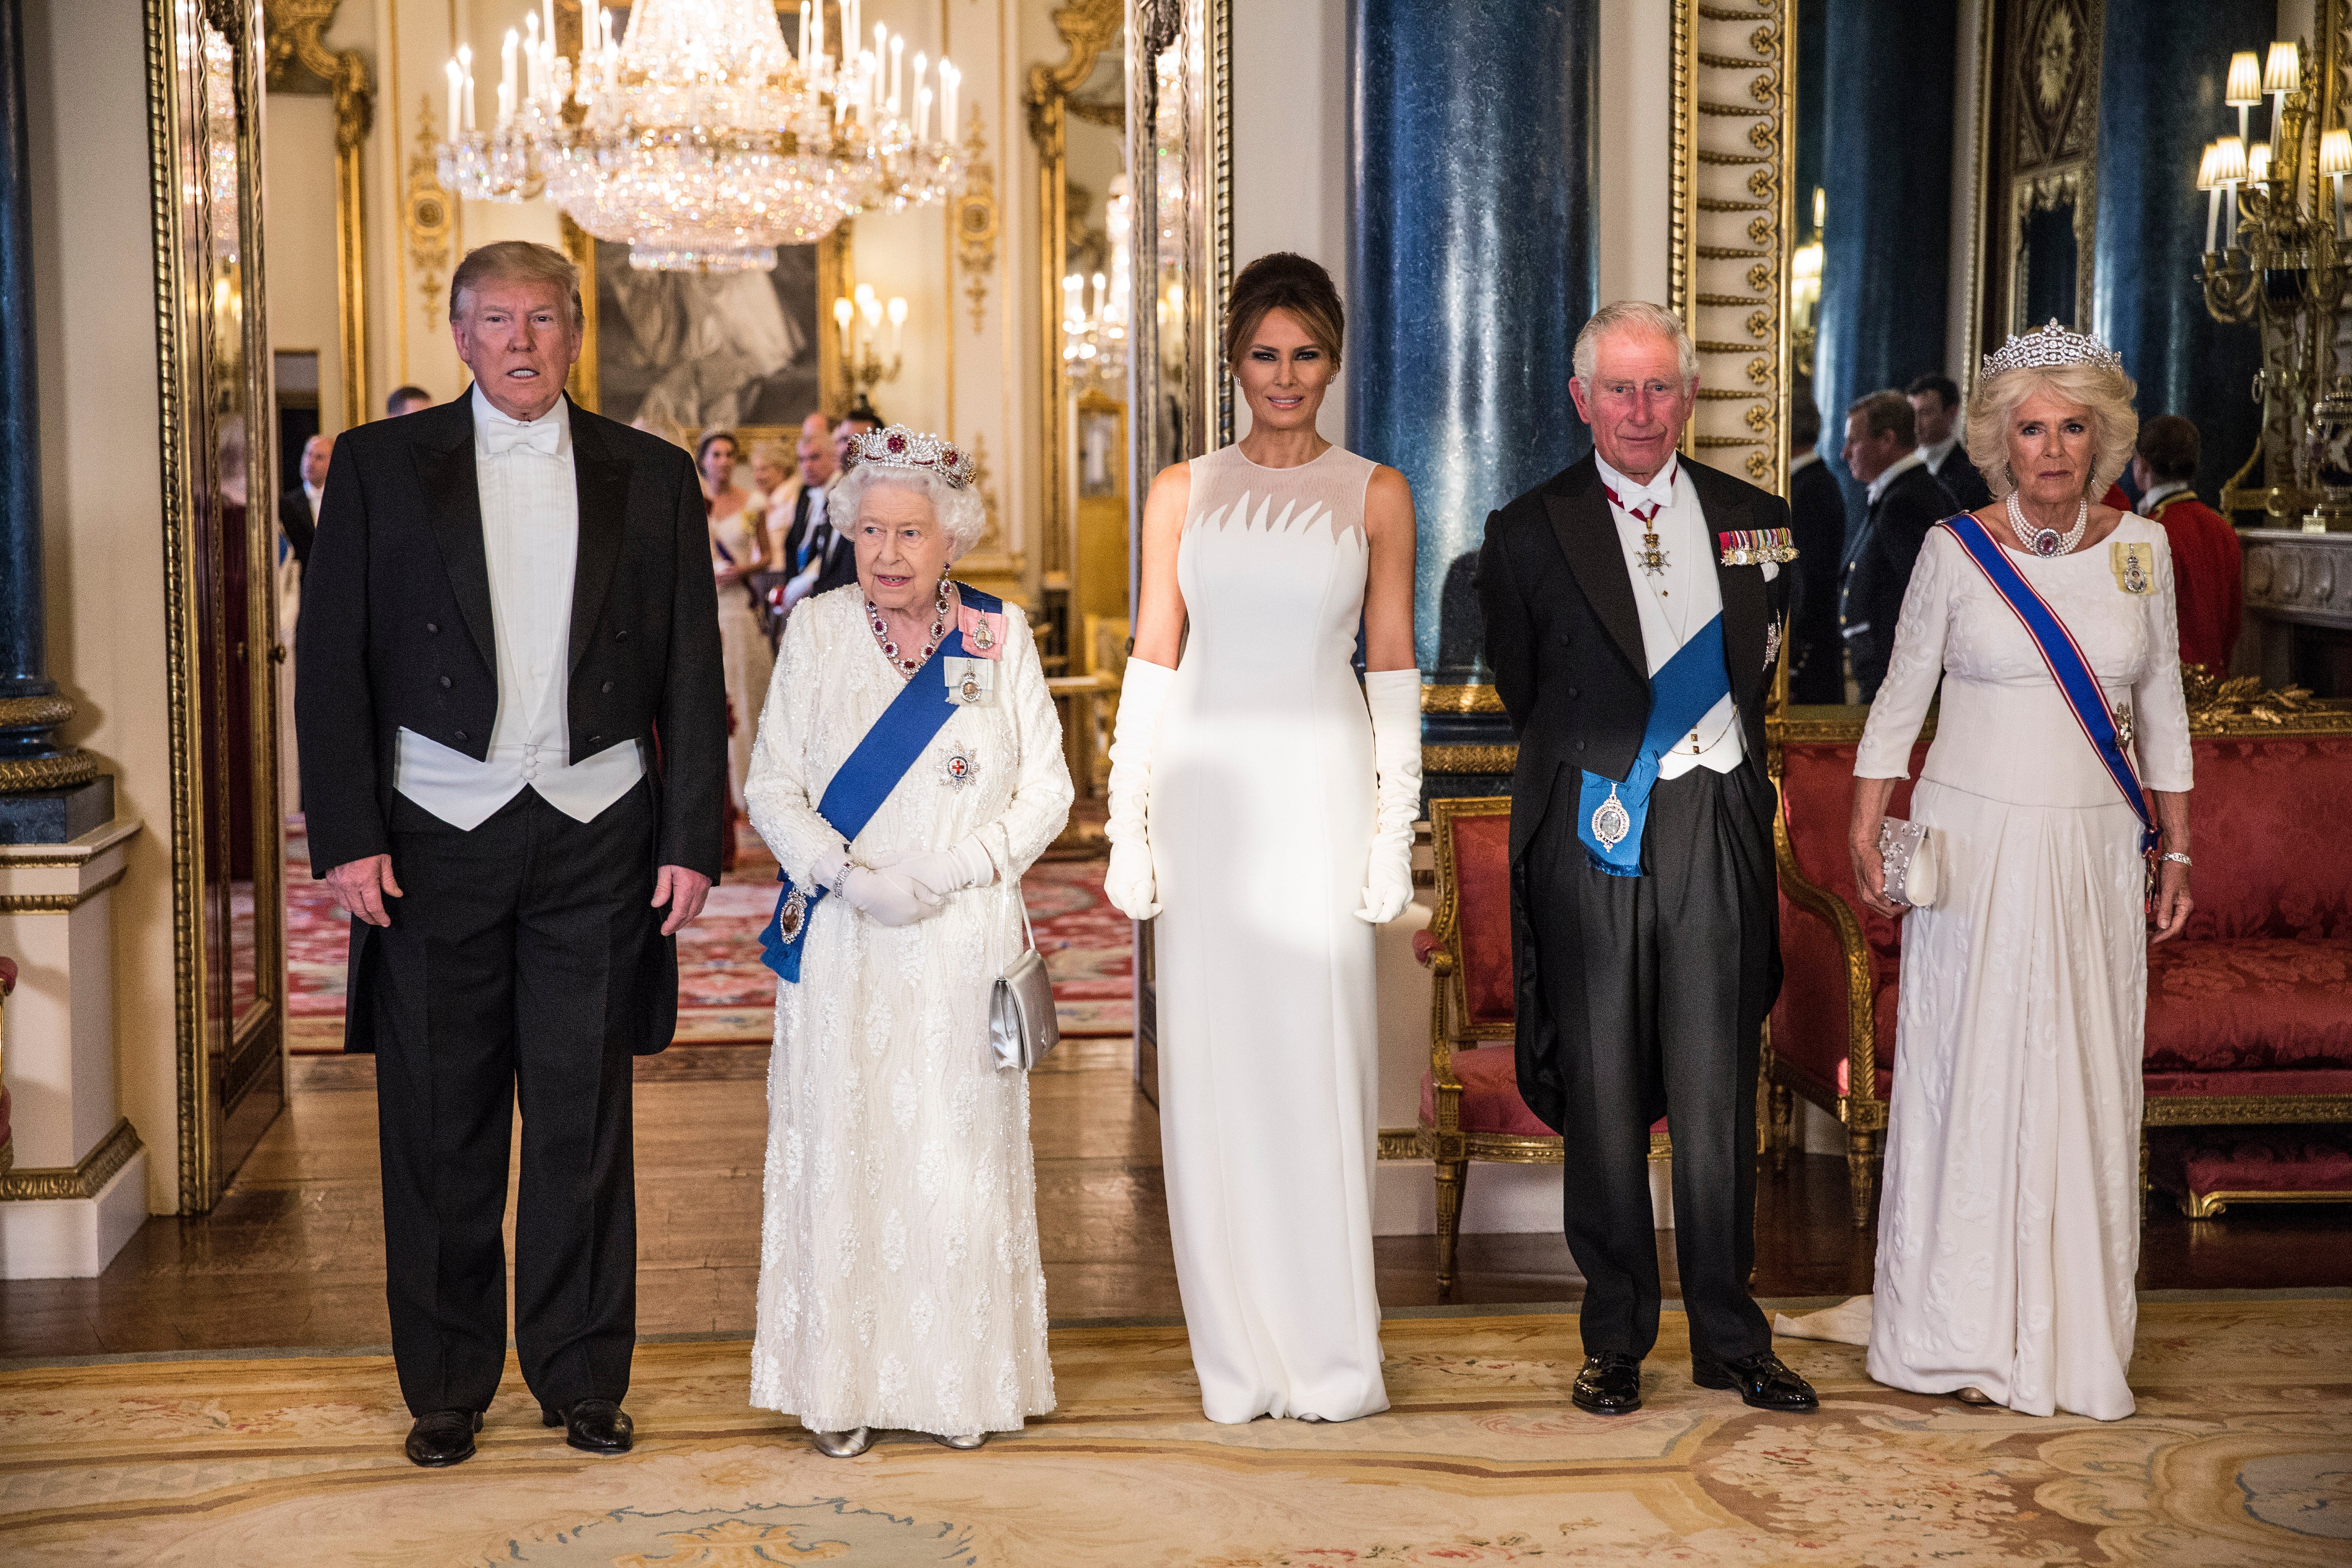 Donald Trump, Melania Trump, and members of the royal family.